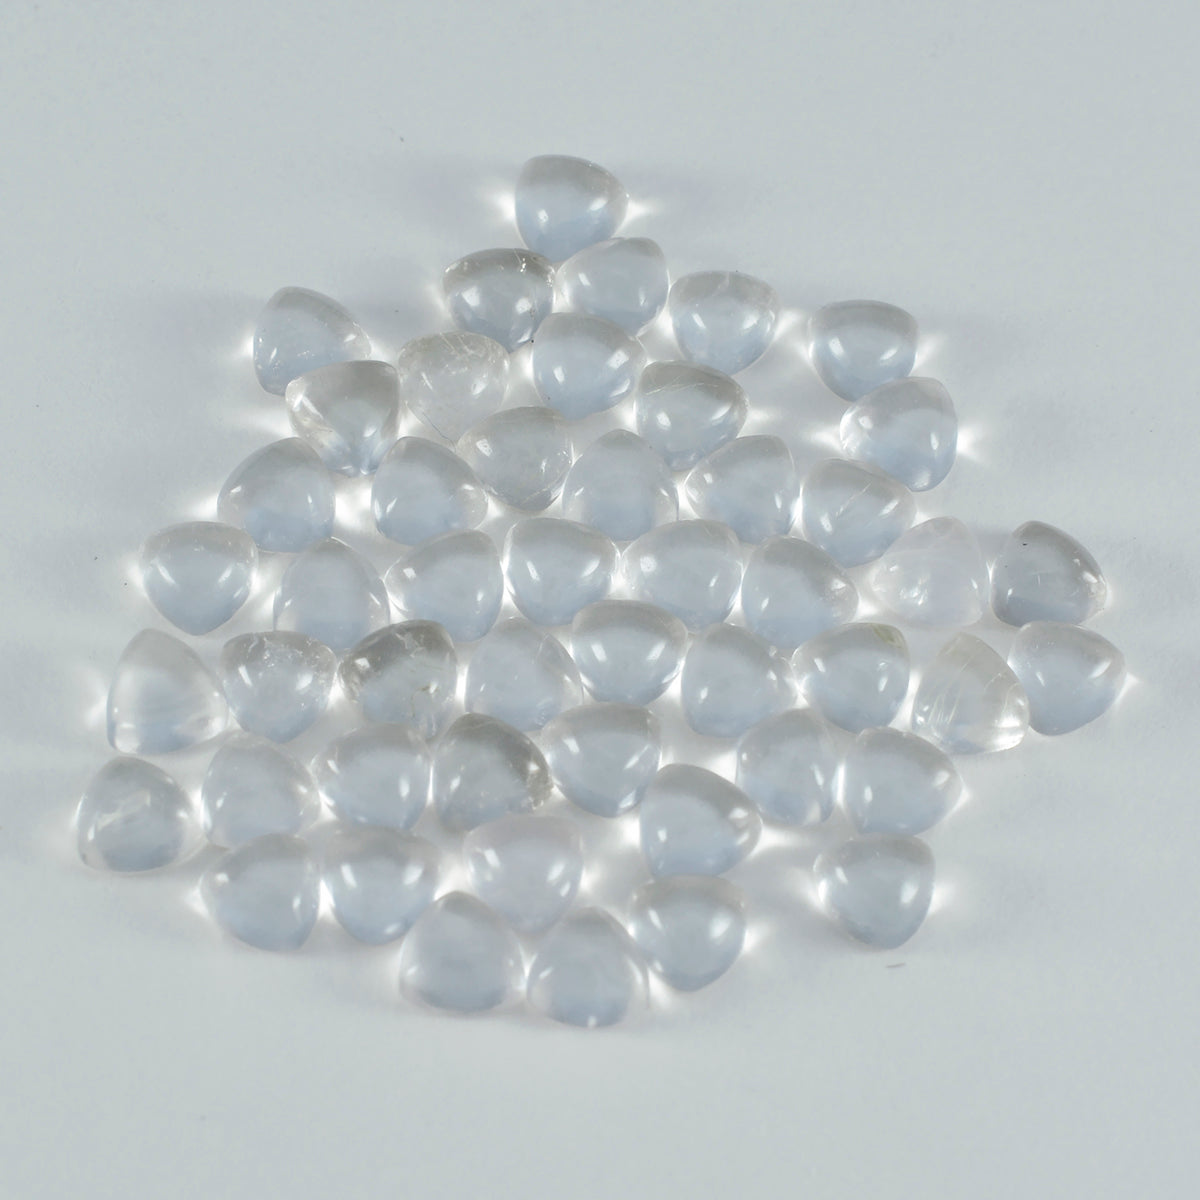 riyogems 1pc ホワイト クリスタル クォーツ カボション 6x6 mm 兆形状の素晴らしい品質の宝石